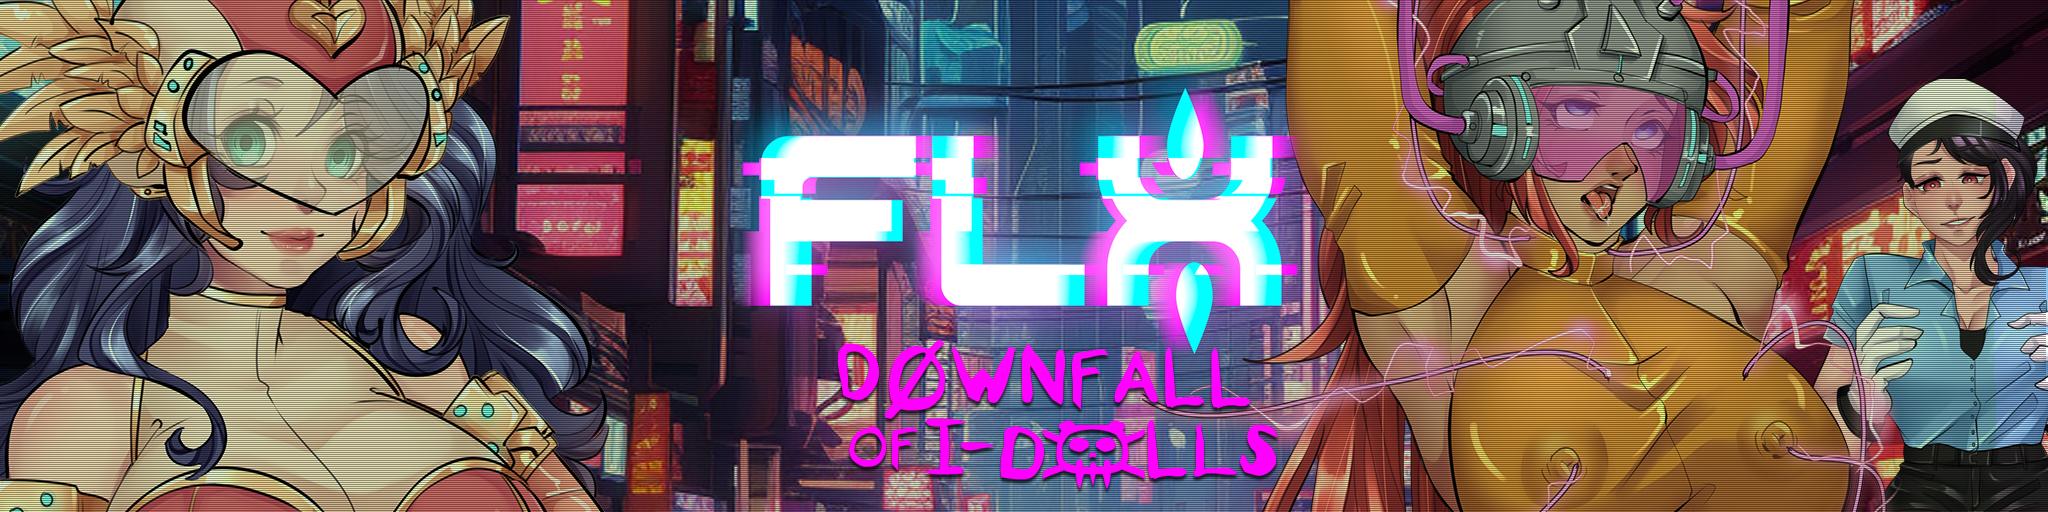 FLX - Downfall of I-Dolls1.png